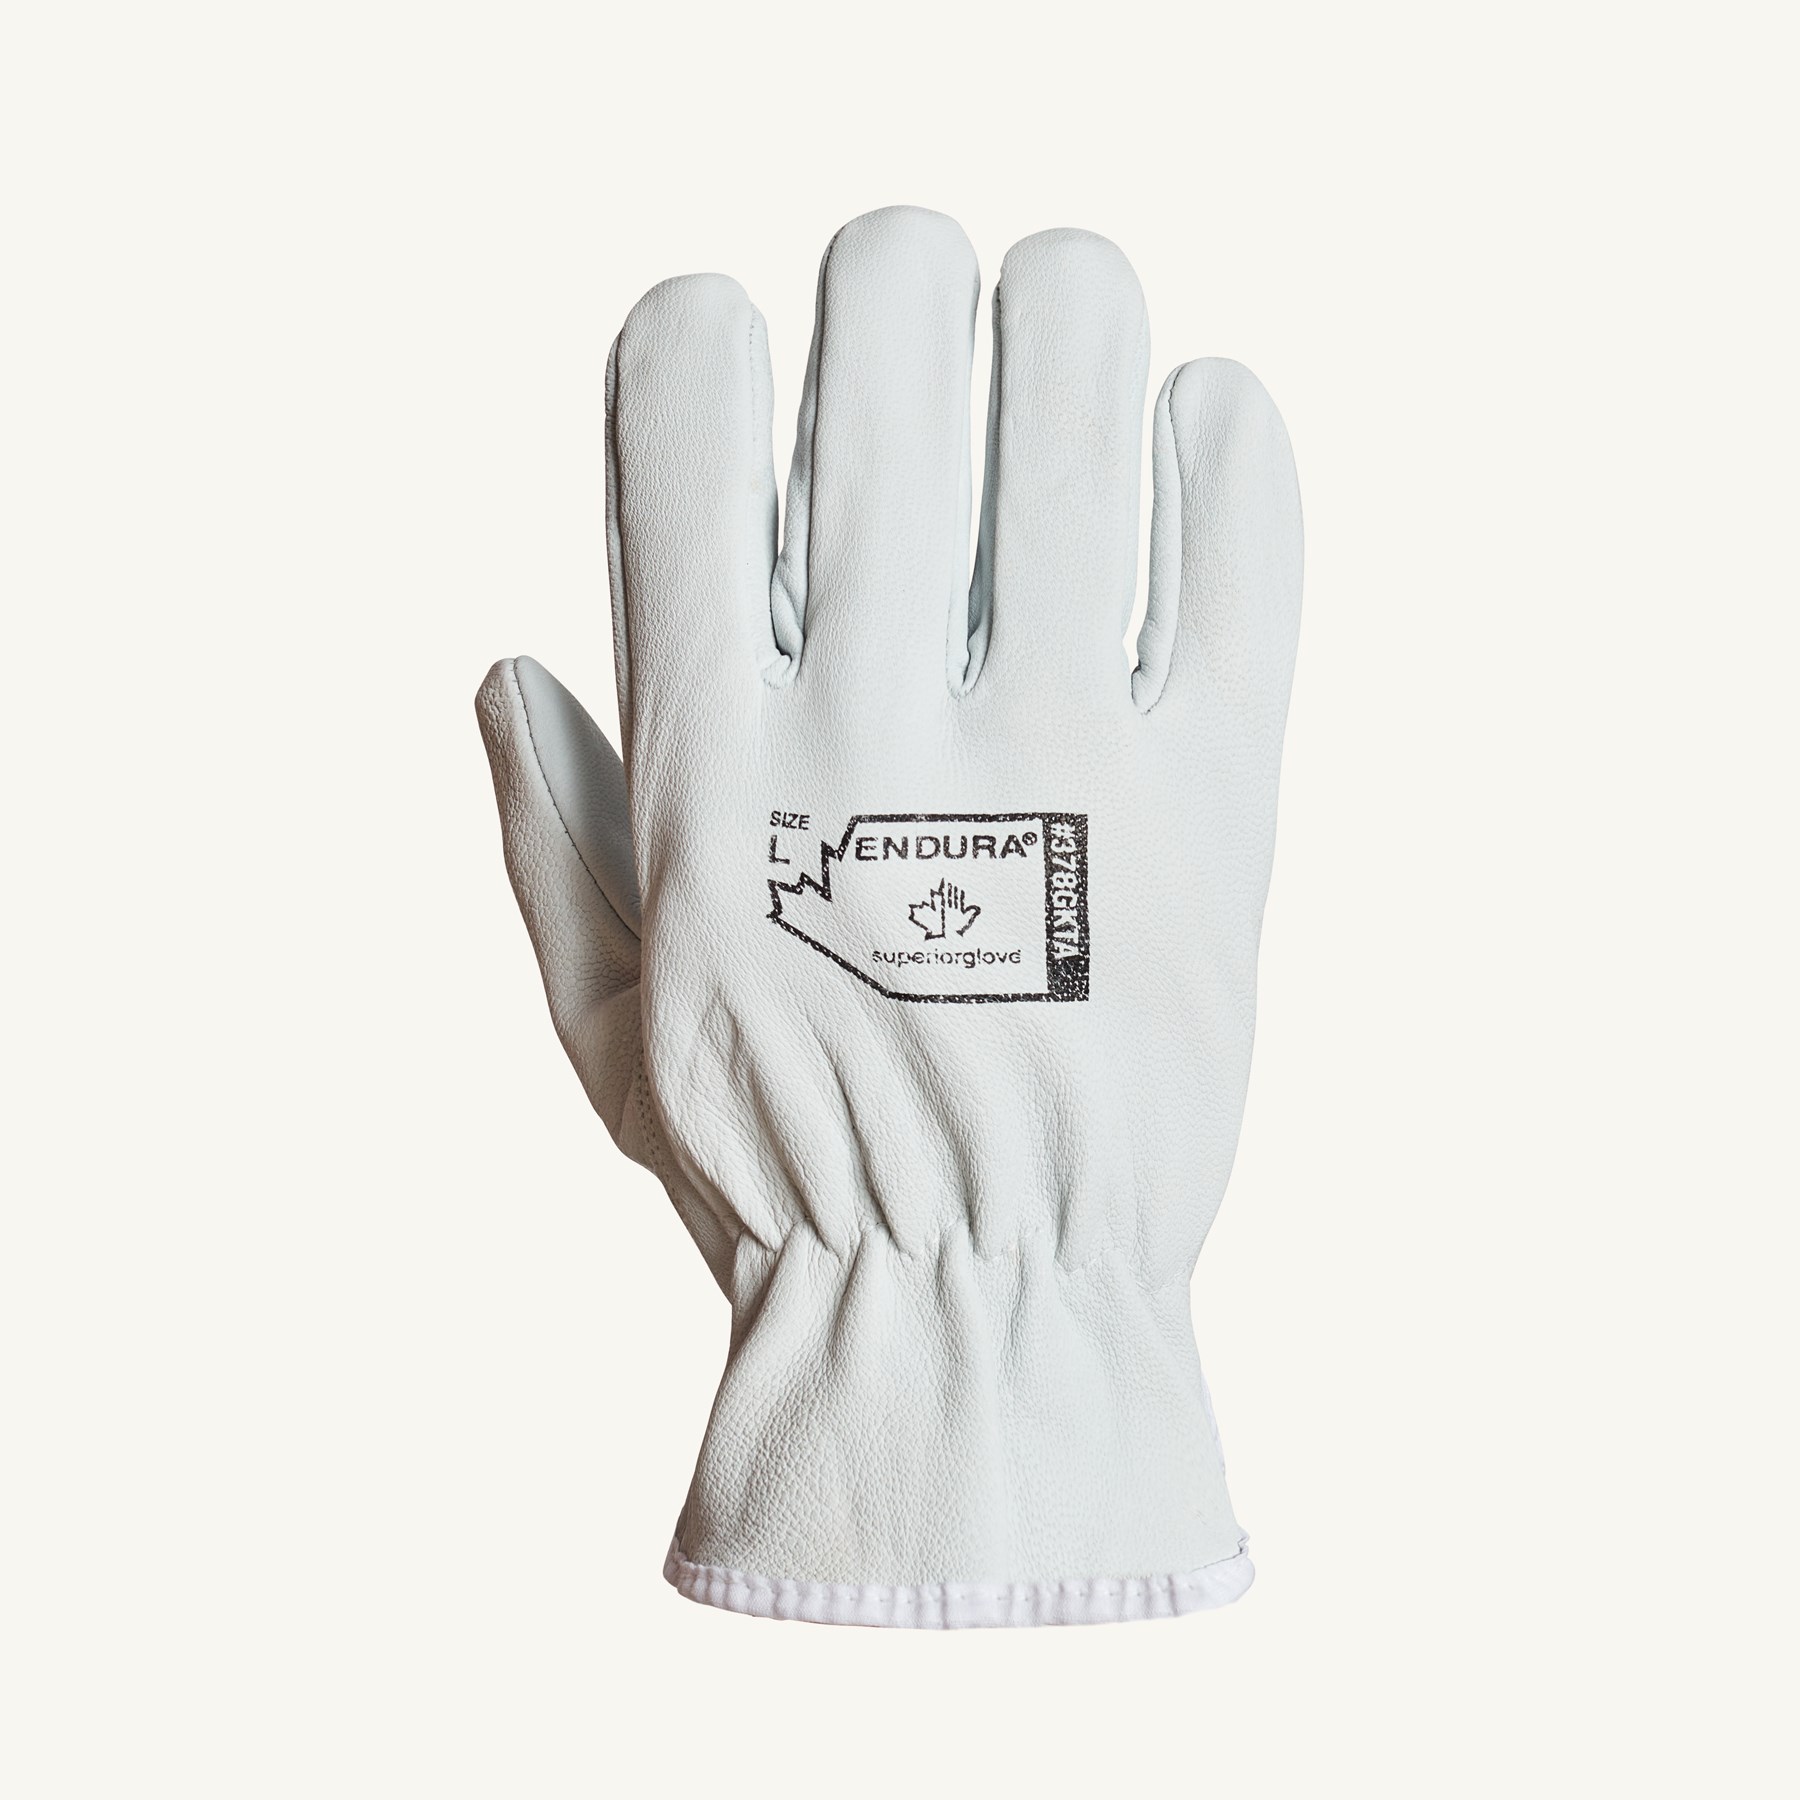 3M™ Comfort Grip Glove CGM-GU, General Use, Size M